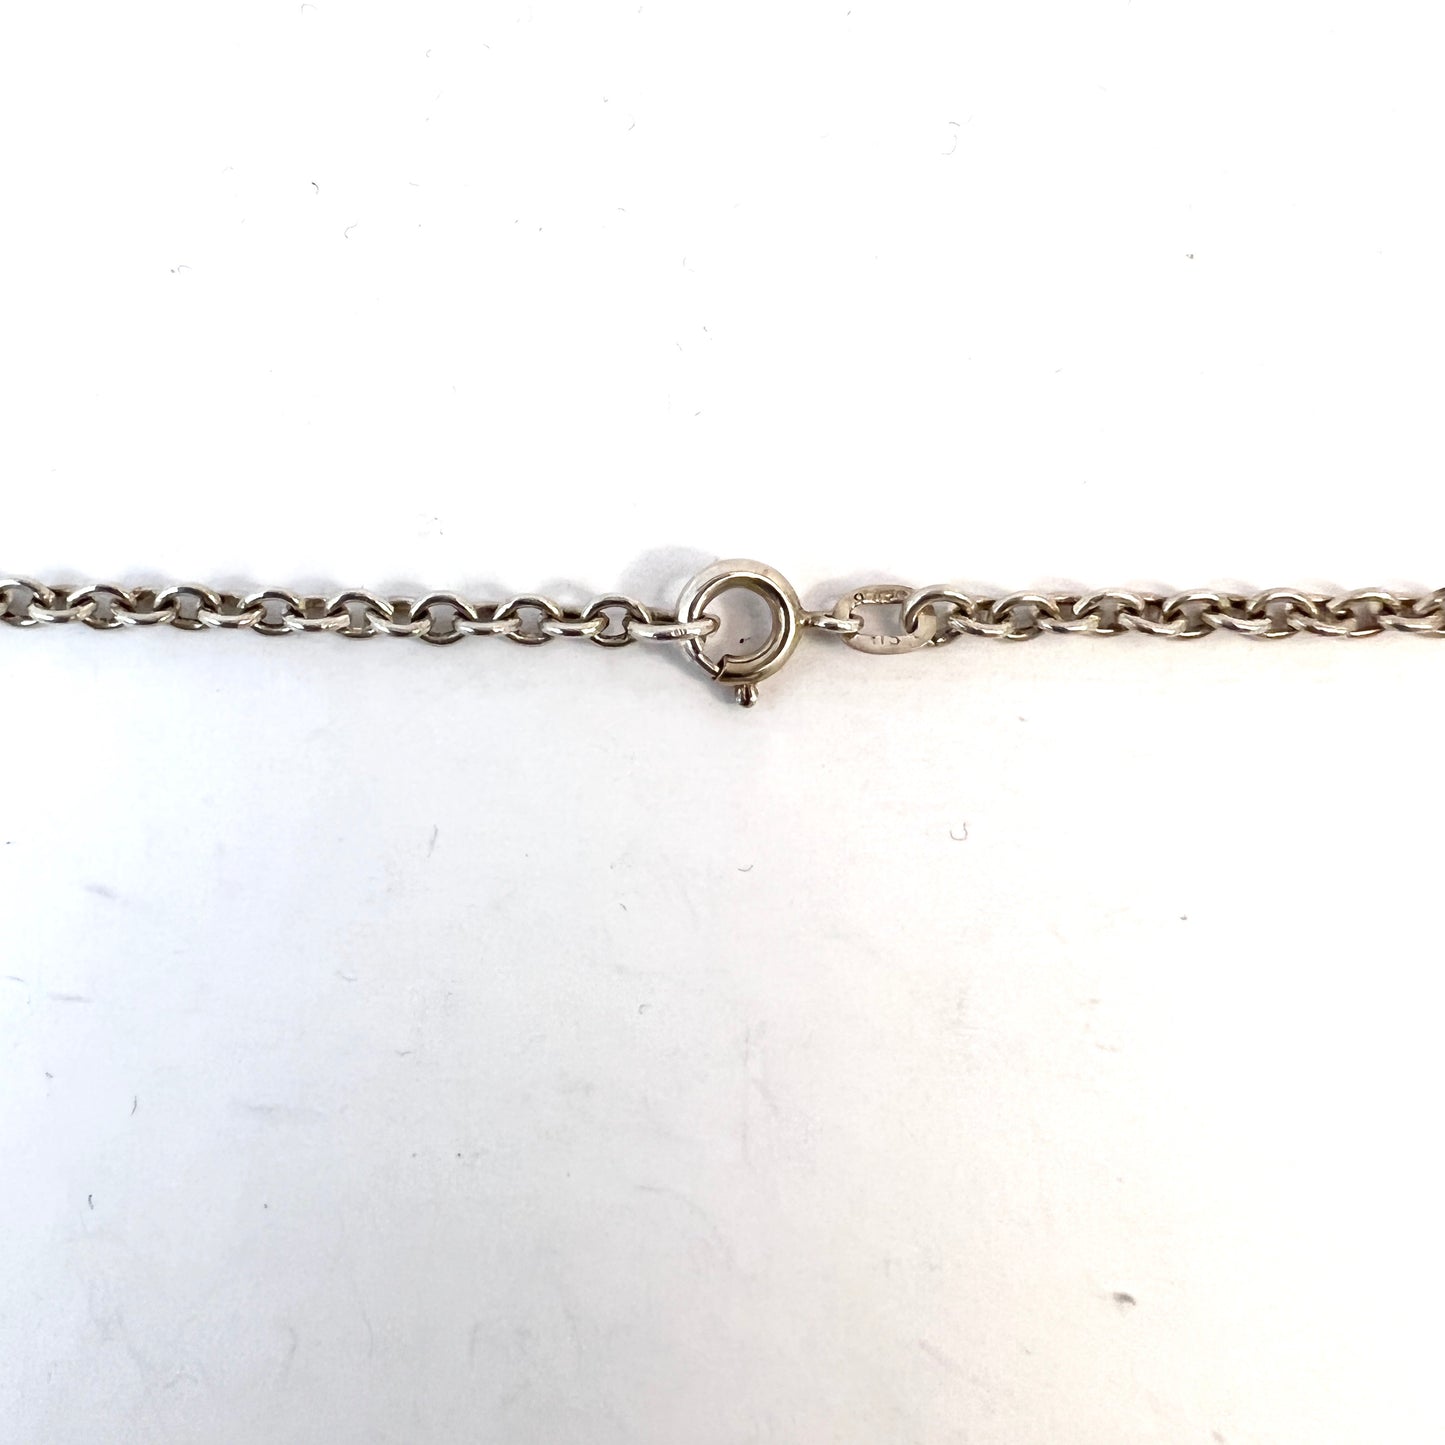 G Dahlgren, Sweden 1946. Vintage Solid Silver Flower Pendant Long Chain Necklace.